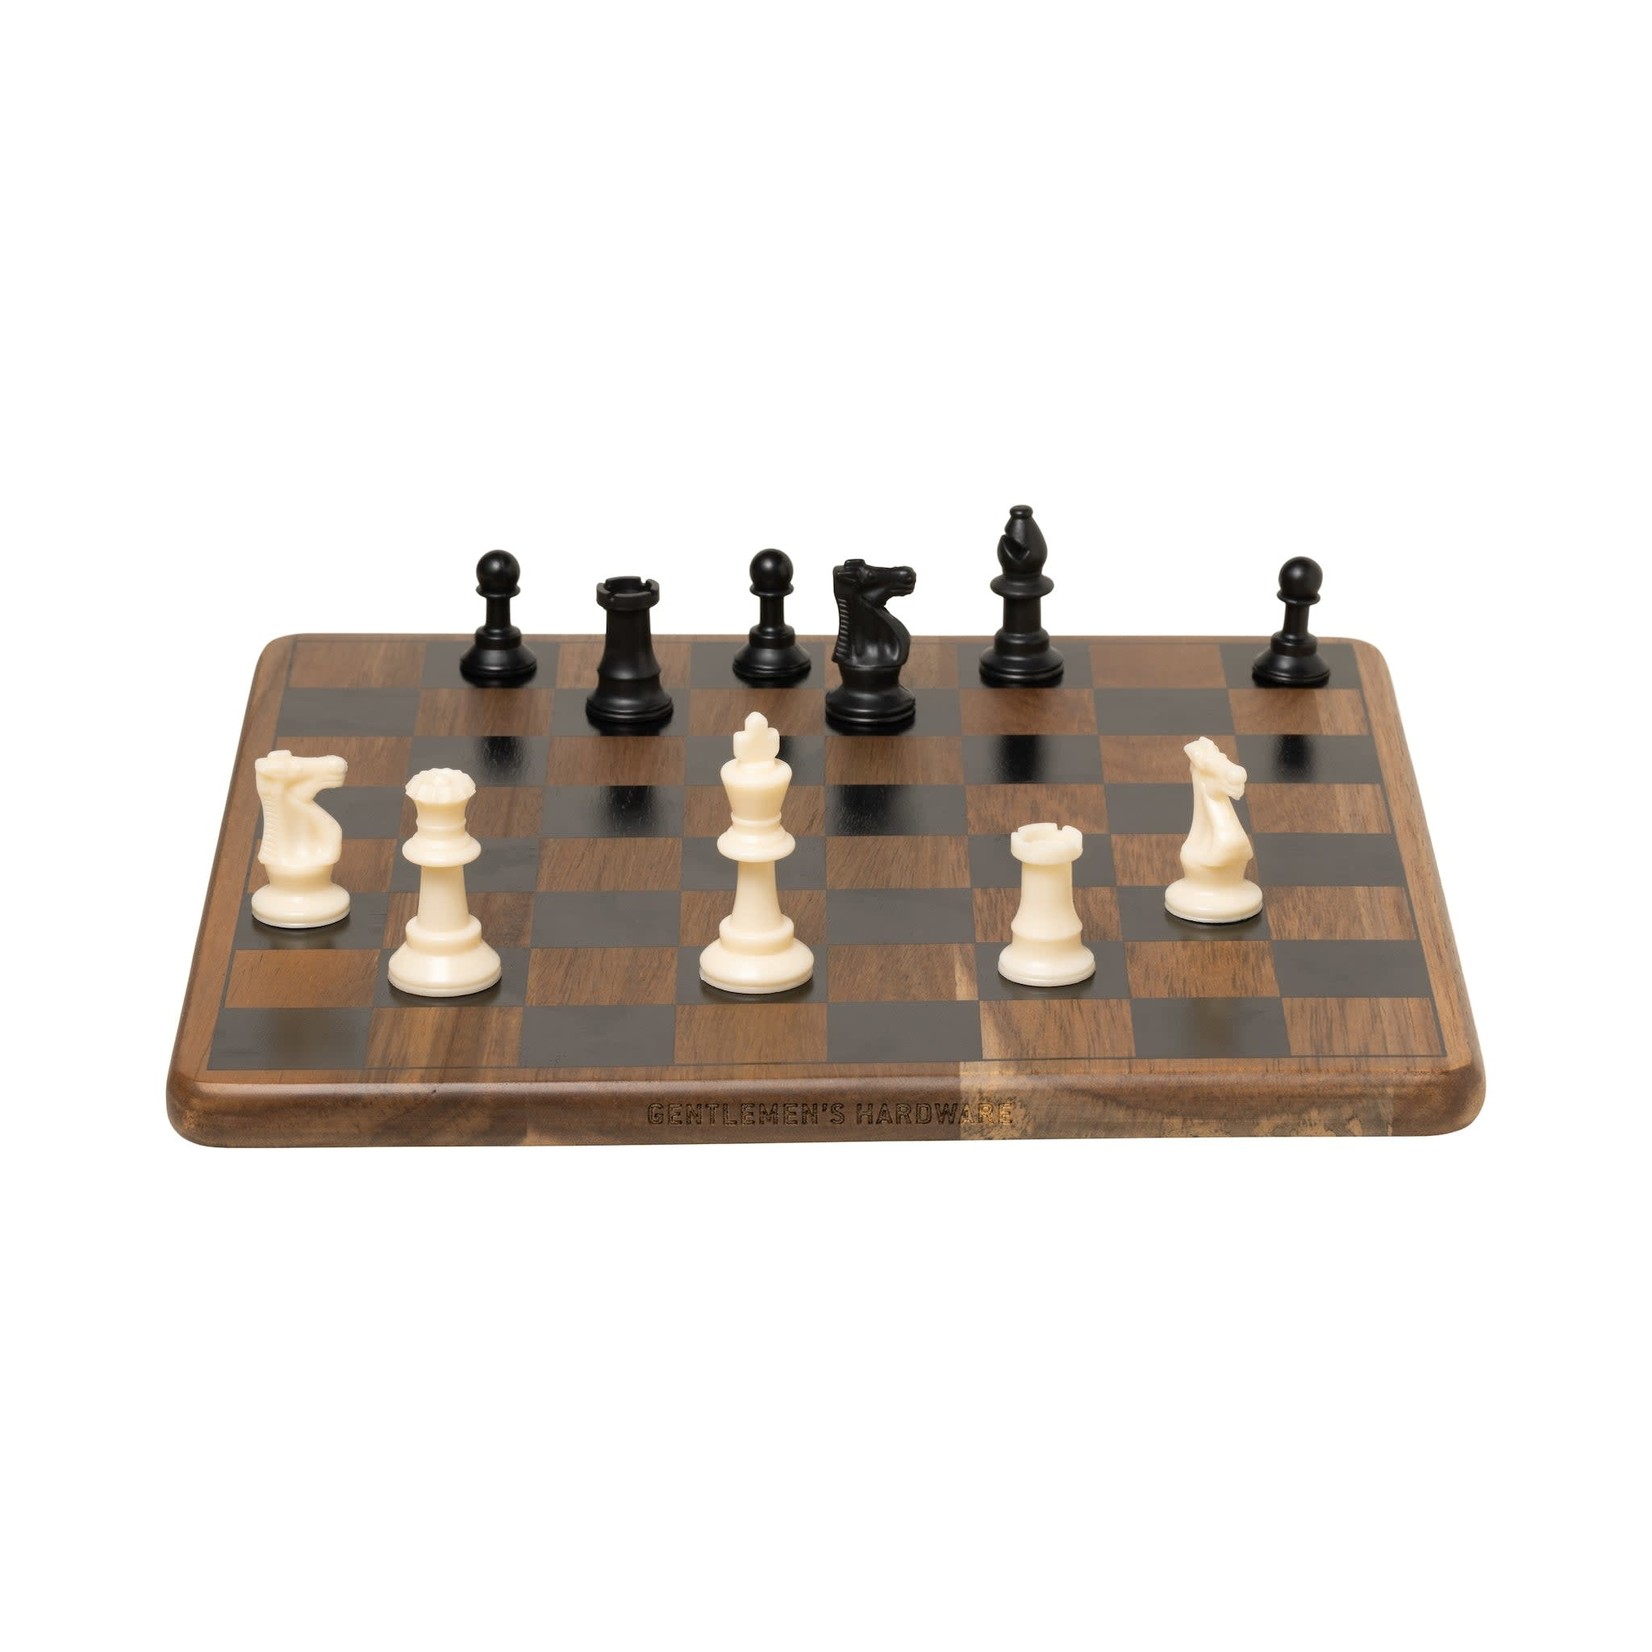 Gentlemen's Hardware Gentlemen's Hardware Wooden Chess Set